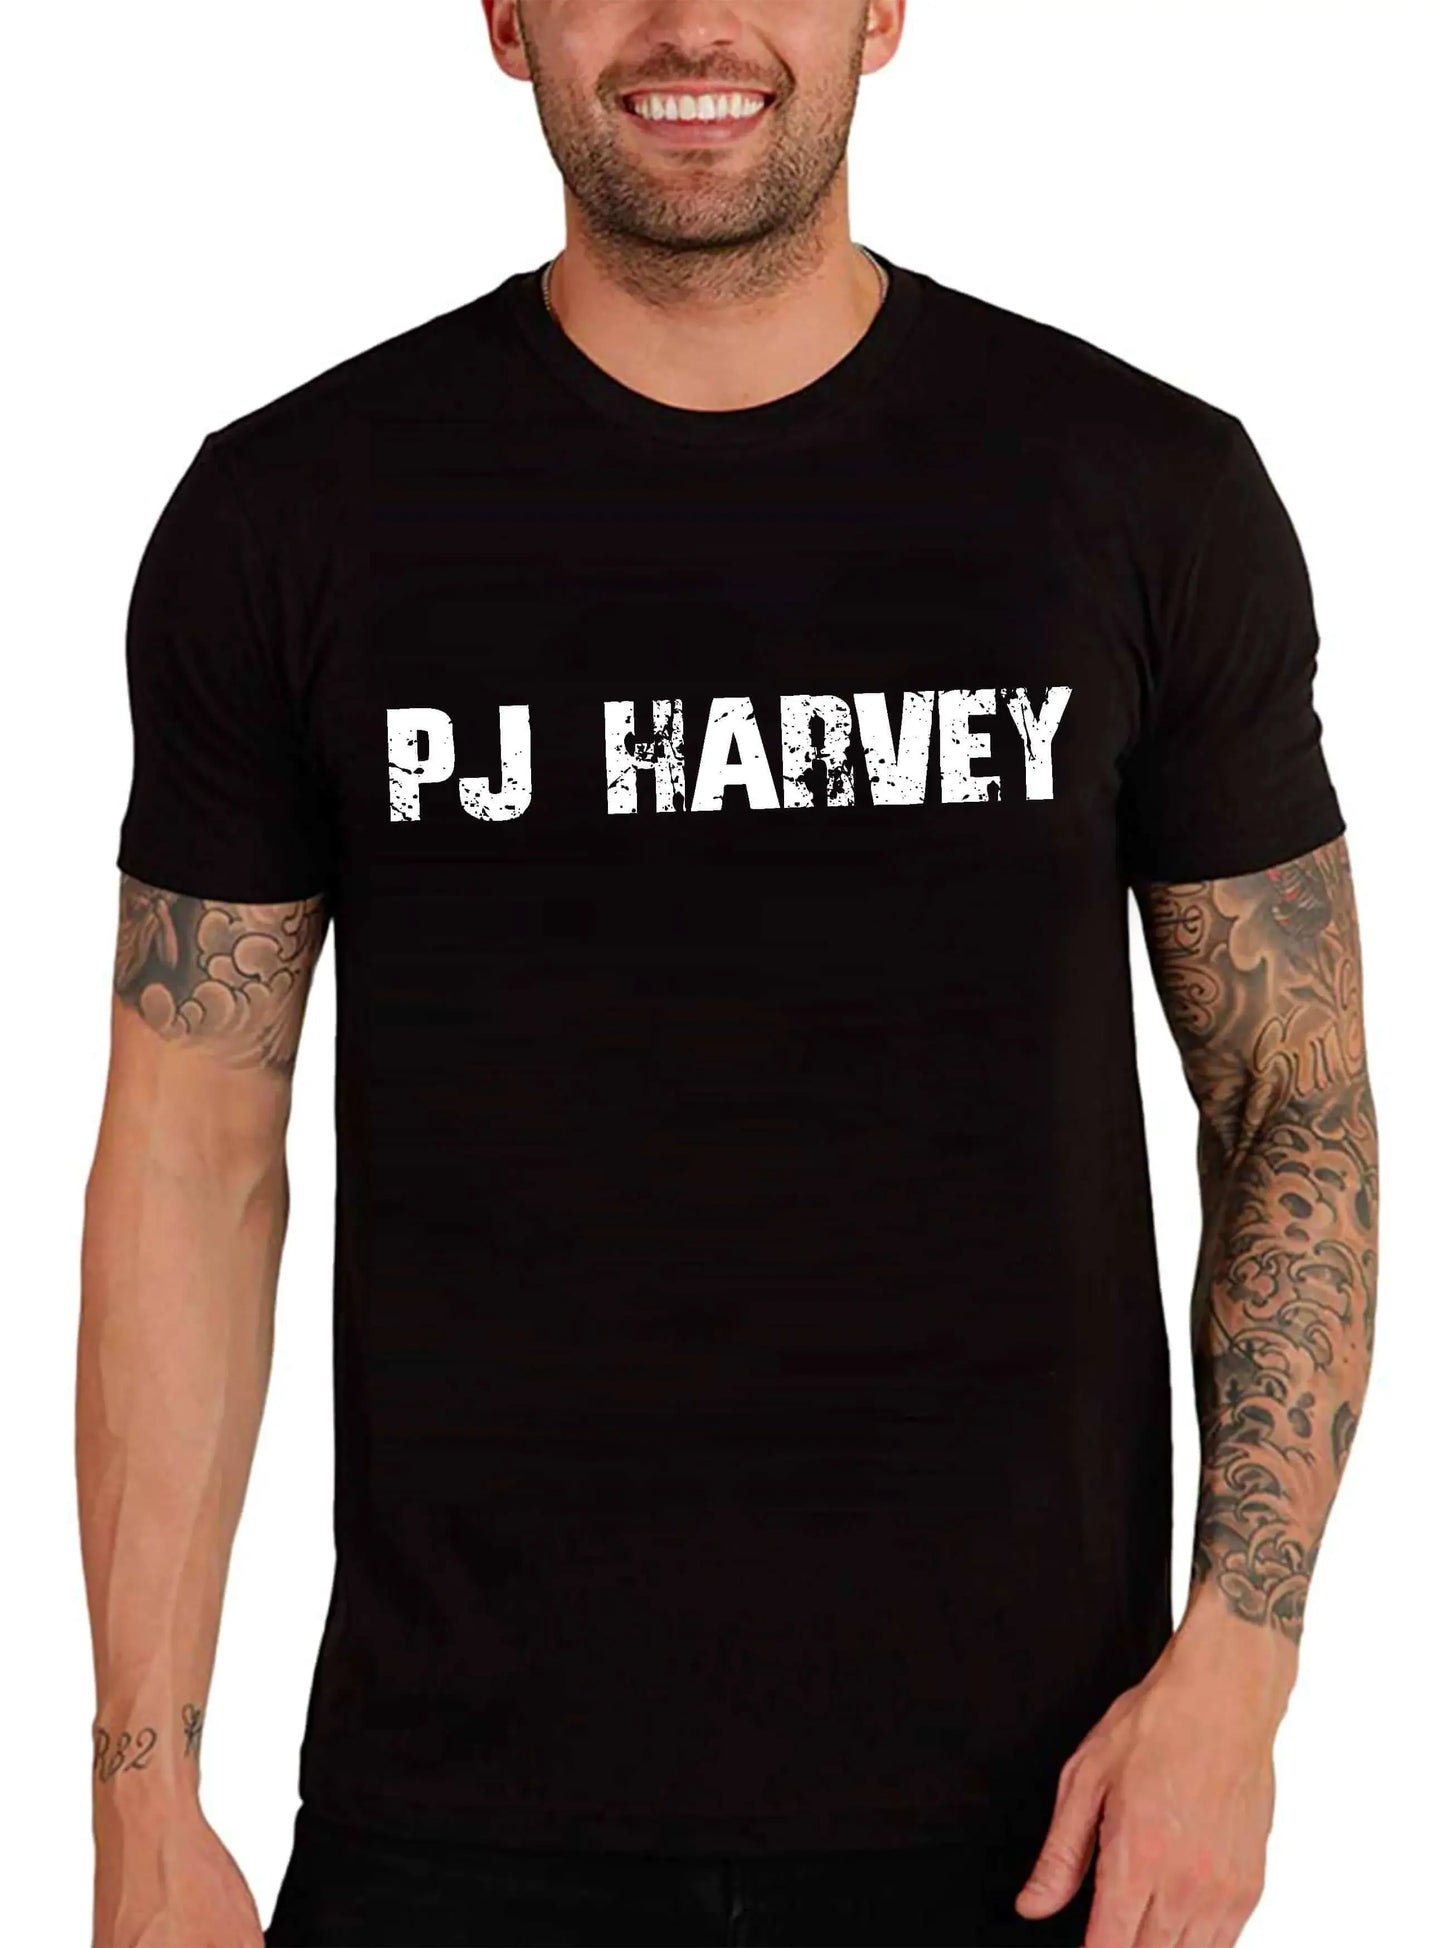 Men's Graphic T-Shirt Pj Harvey Eco-Friendly Limited Edition Short Sleeve Tee-Shirt Vintage Birthday Gift Novelty